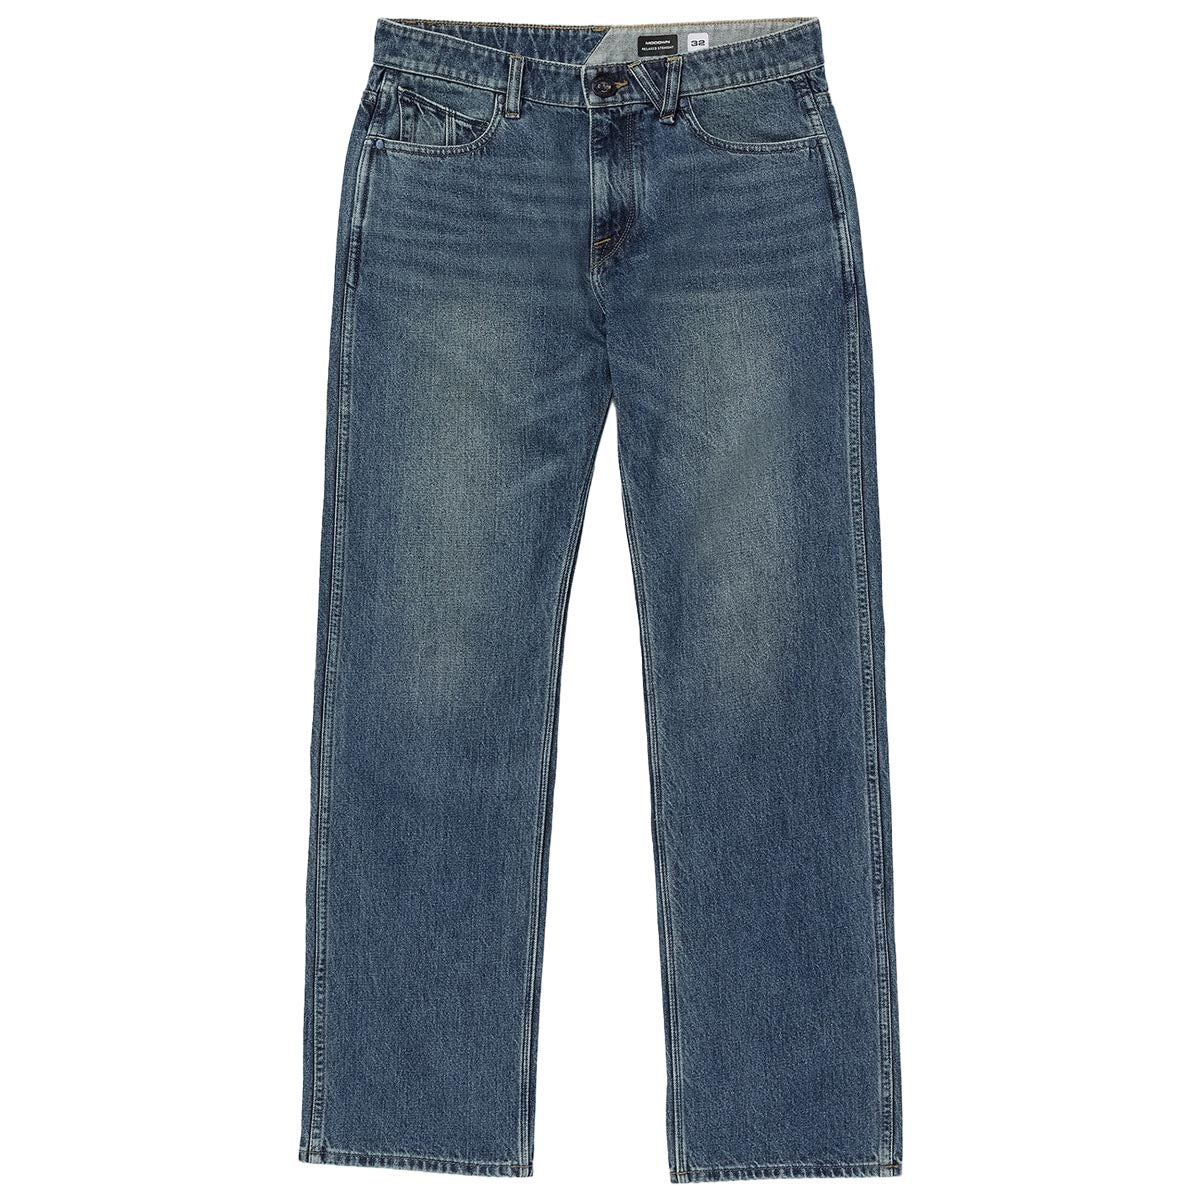 Volcom Modown Denim Pants - Classic Blue image 2